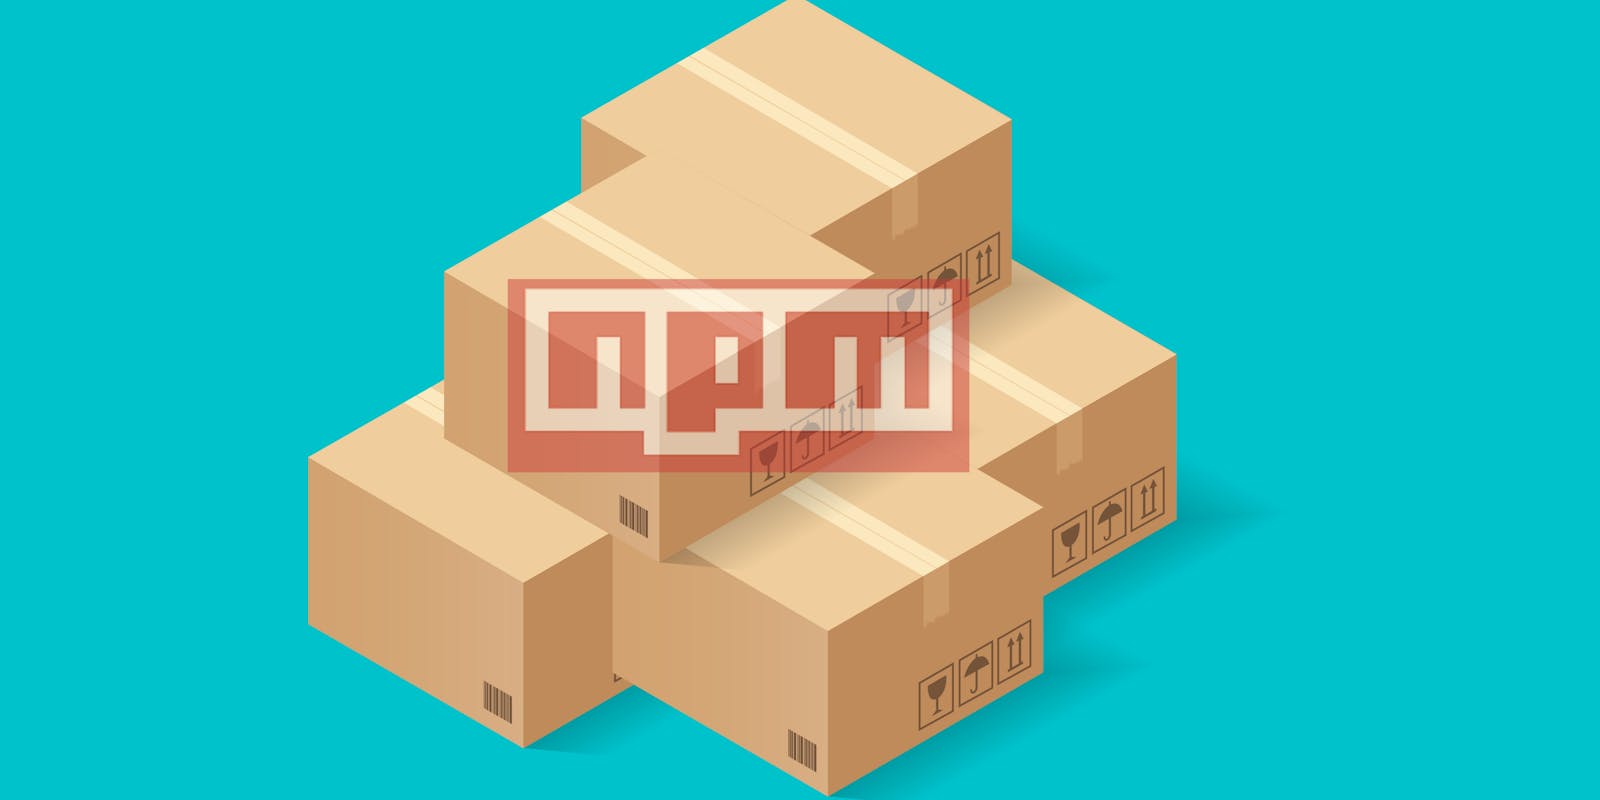 Publish an NPM Package